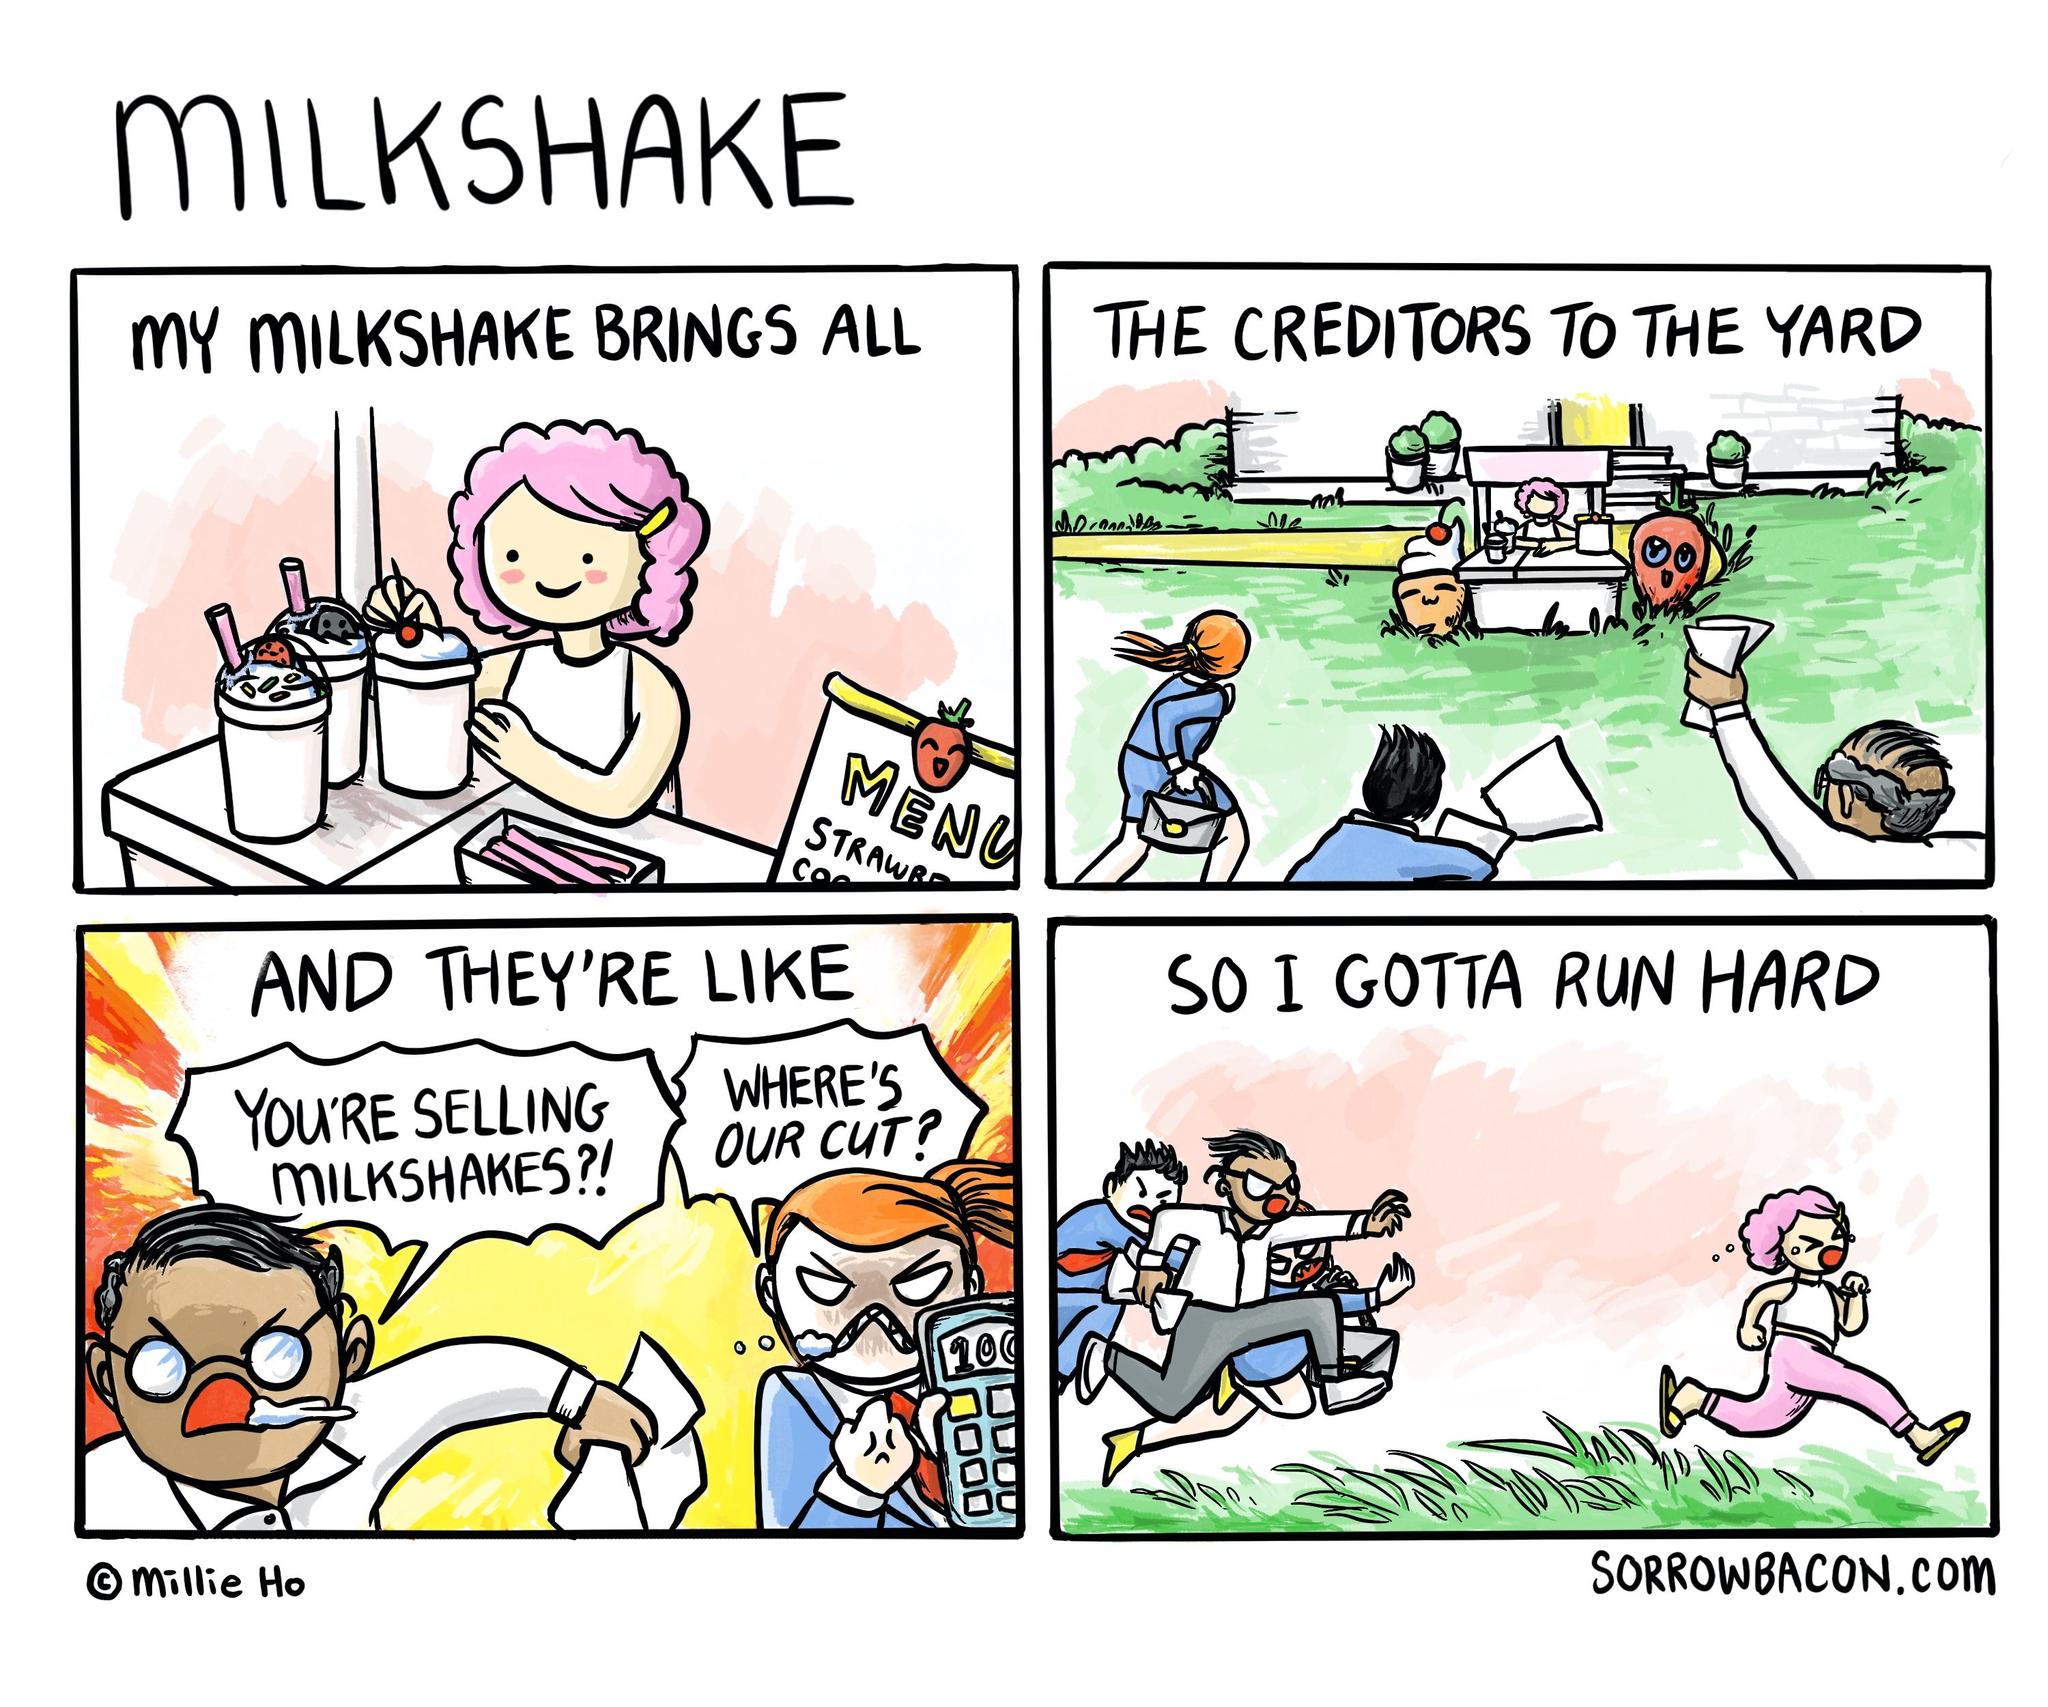 Milkshake sorrowbacon comic